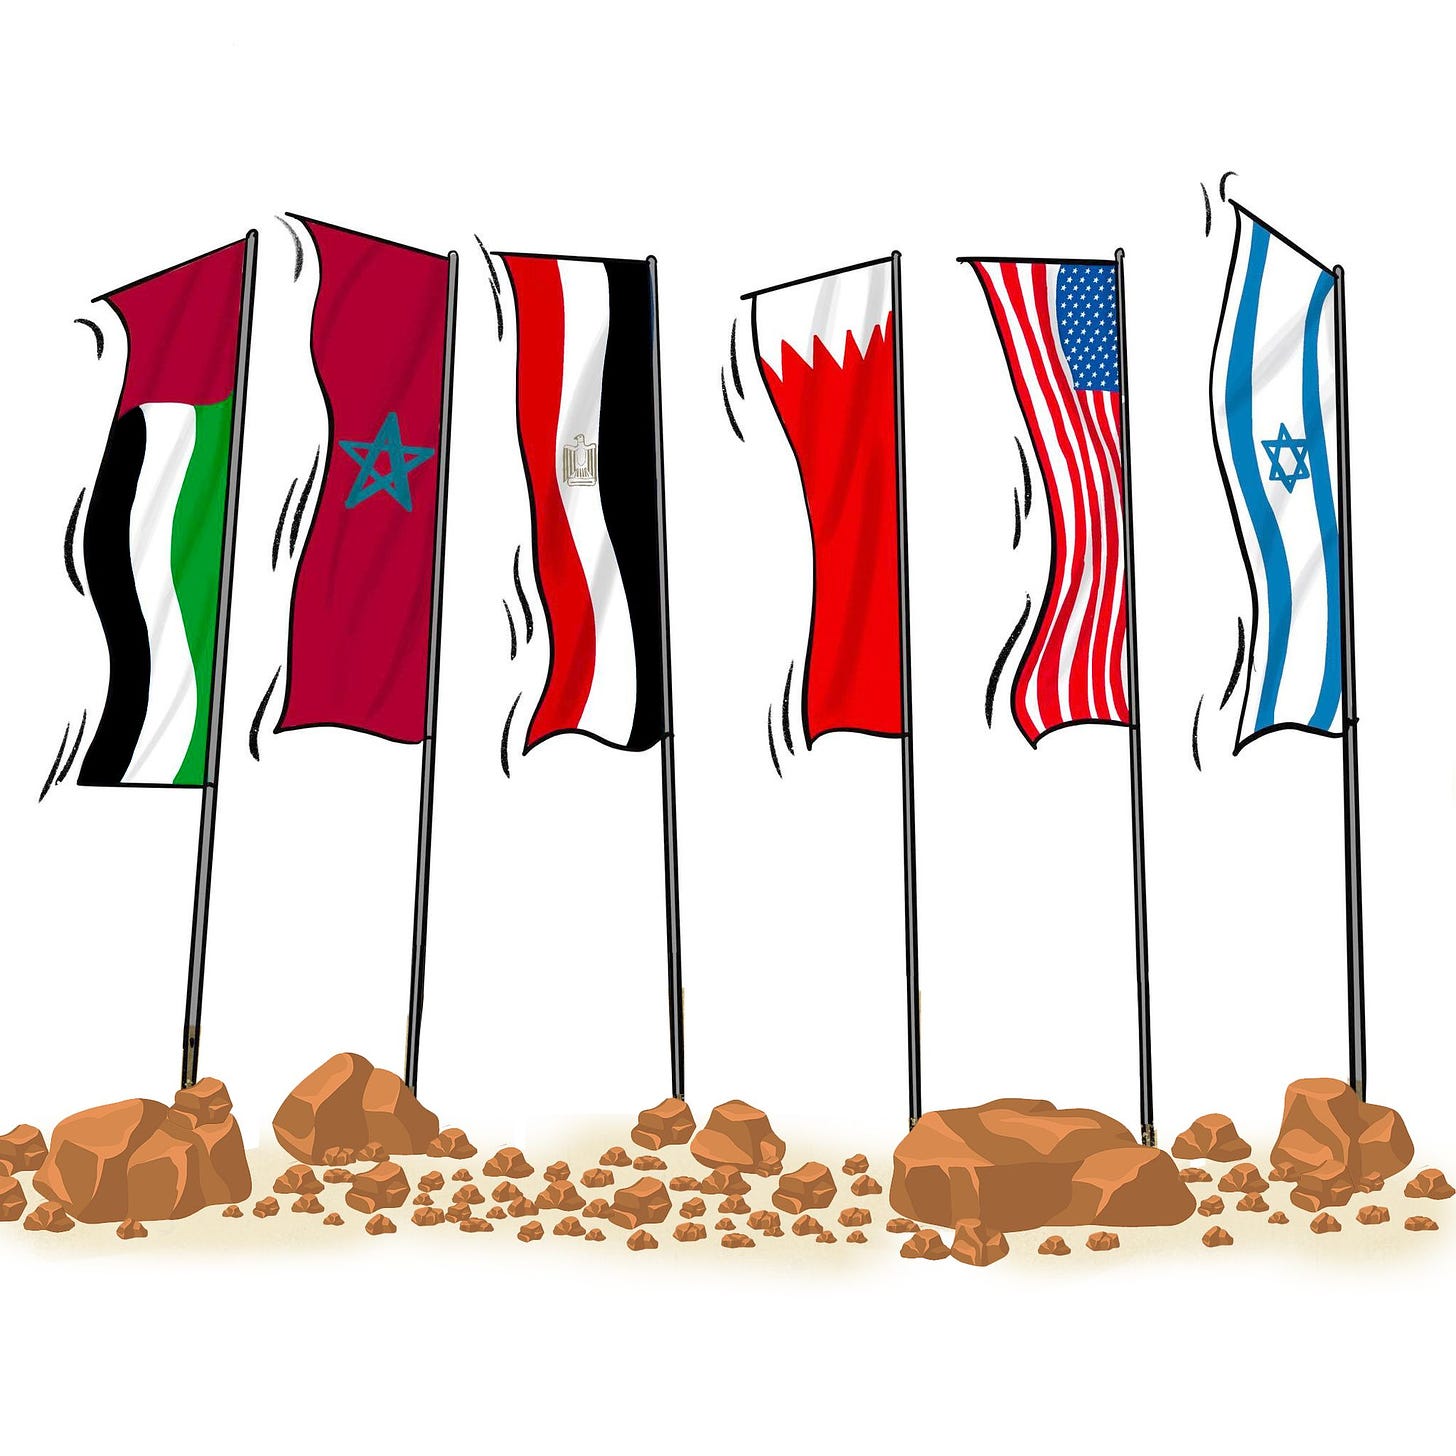 A New Diplomatic Era: 5 Days. 6 Countries. No Palestinians.